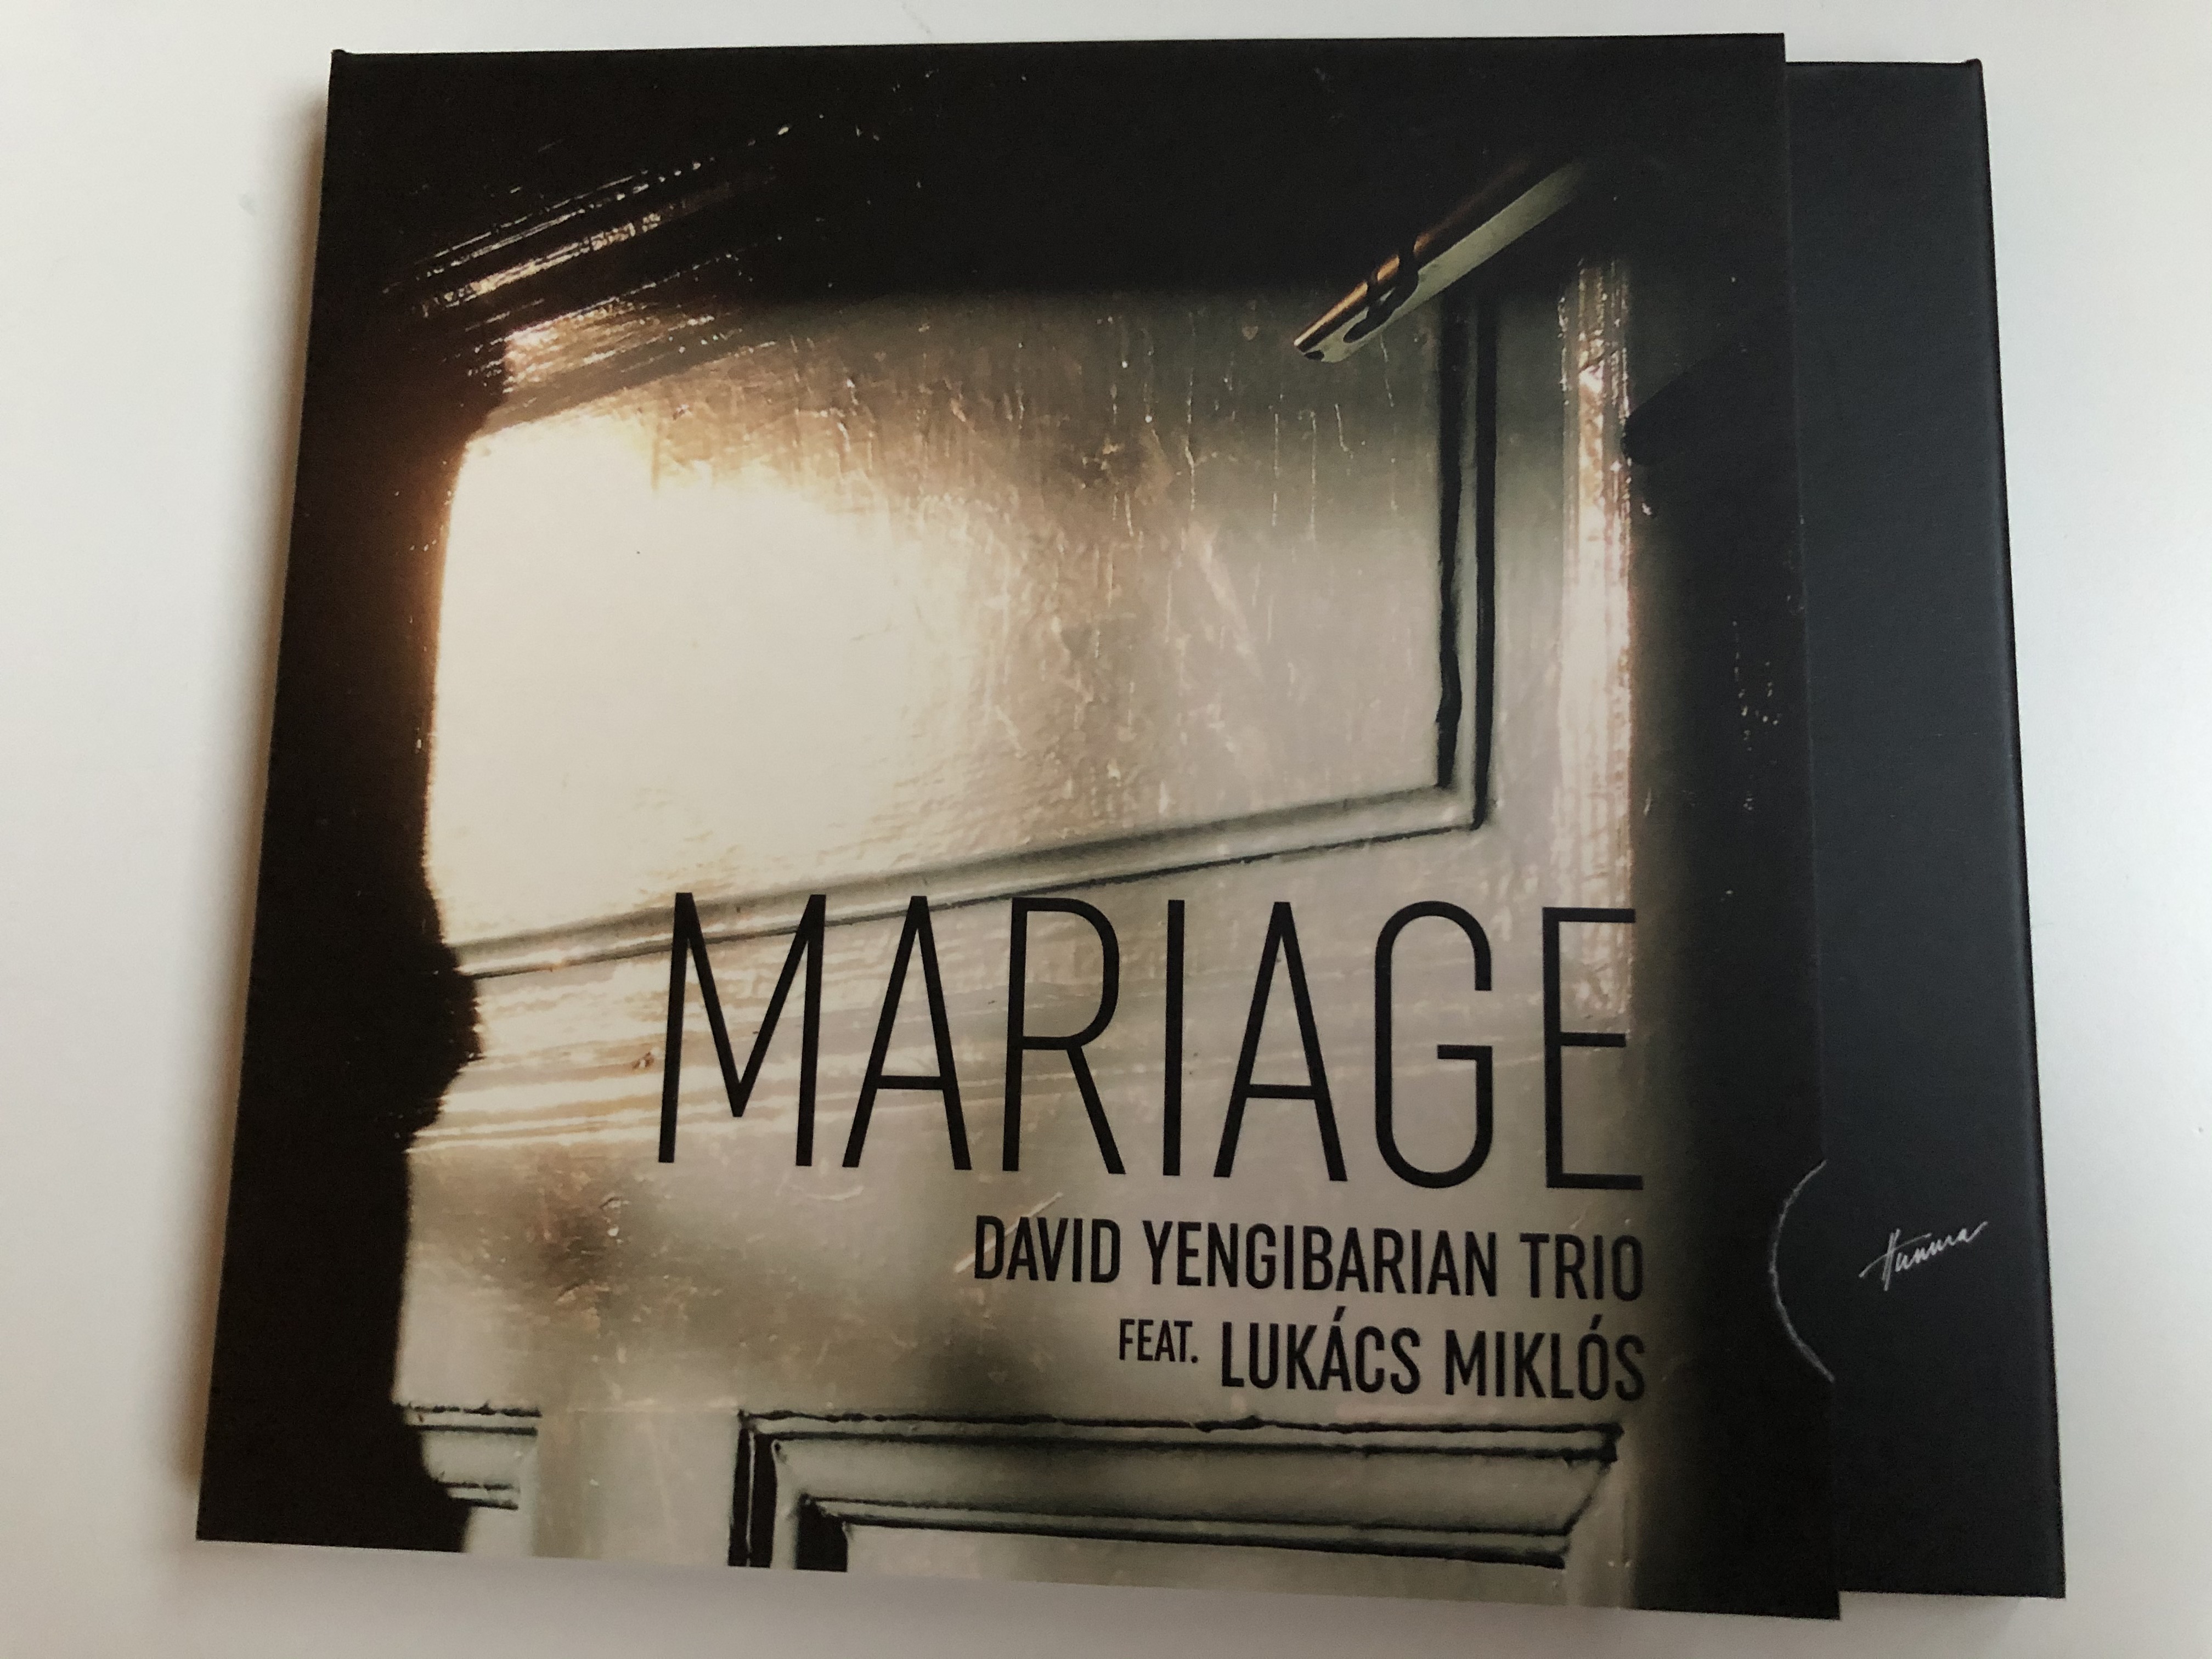 mariage-david-yengibarian-trio-feat.-lukacs-miklos-hunnia-records-film-production-audio-cd-2014-hrcd1411-1-.jpg